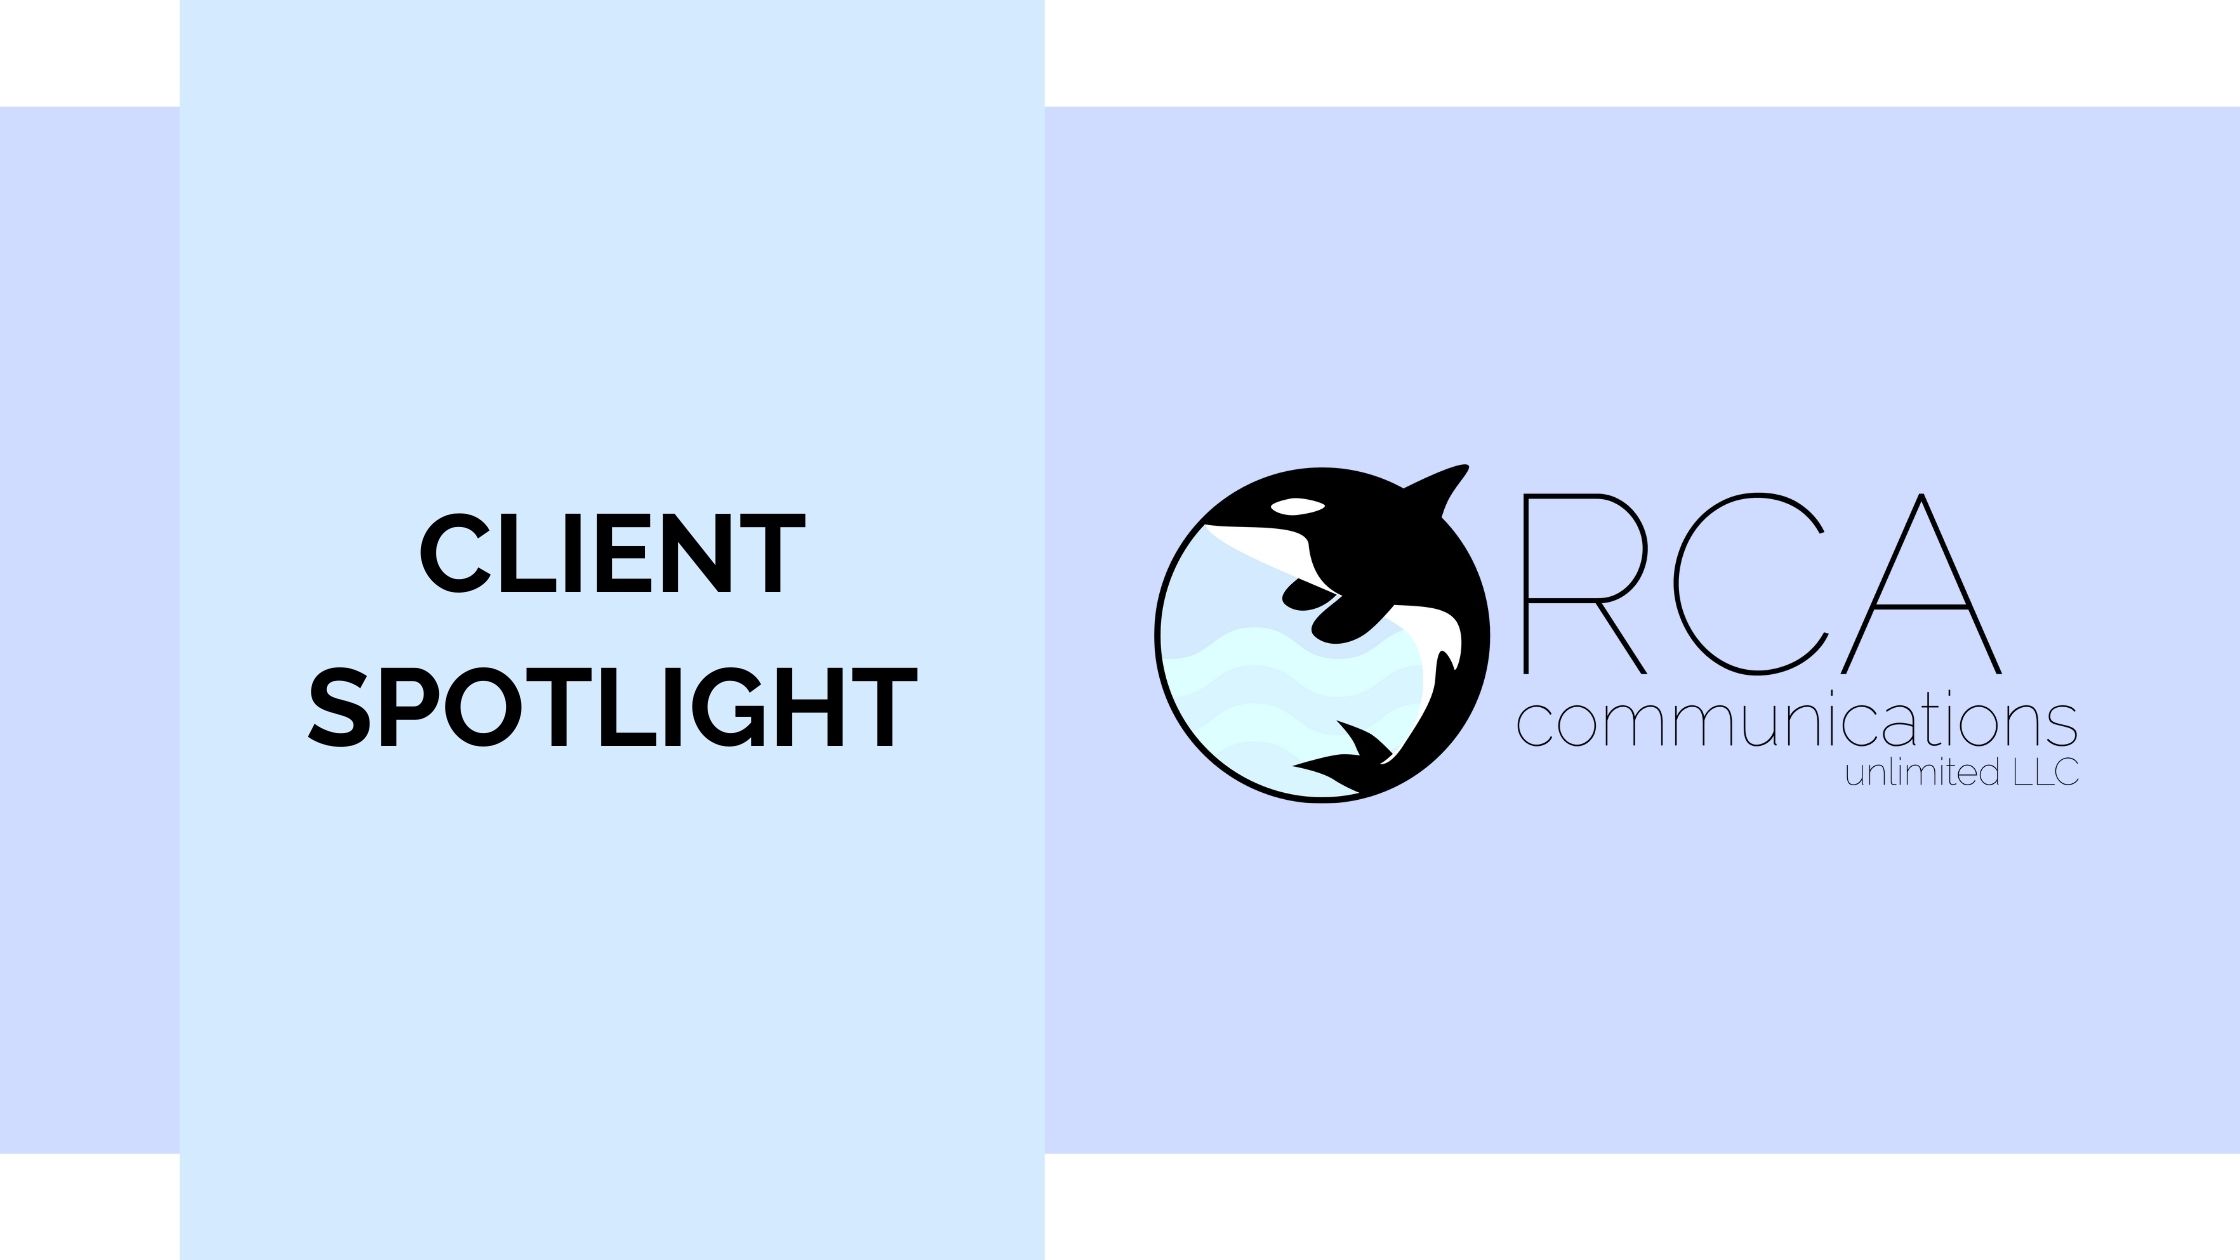 Orca Communications Client Spotlight